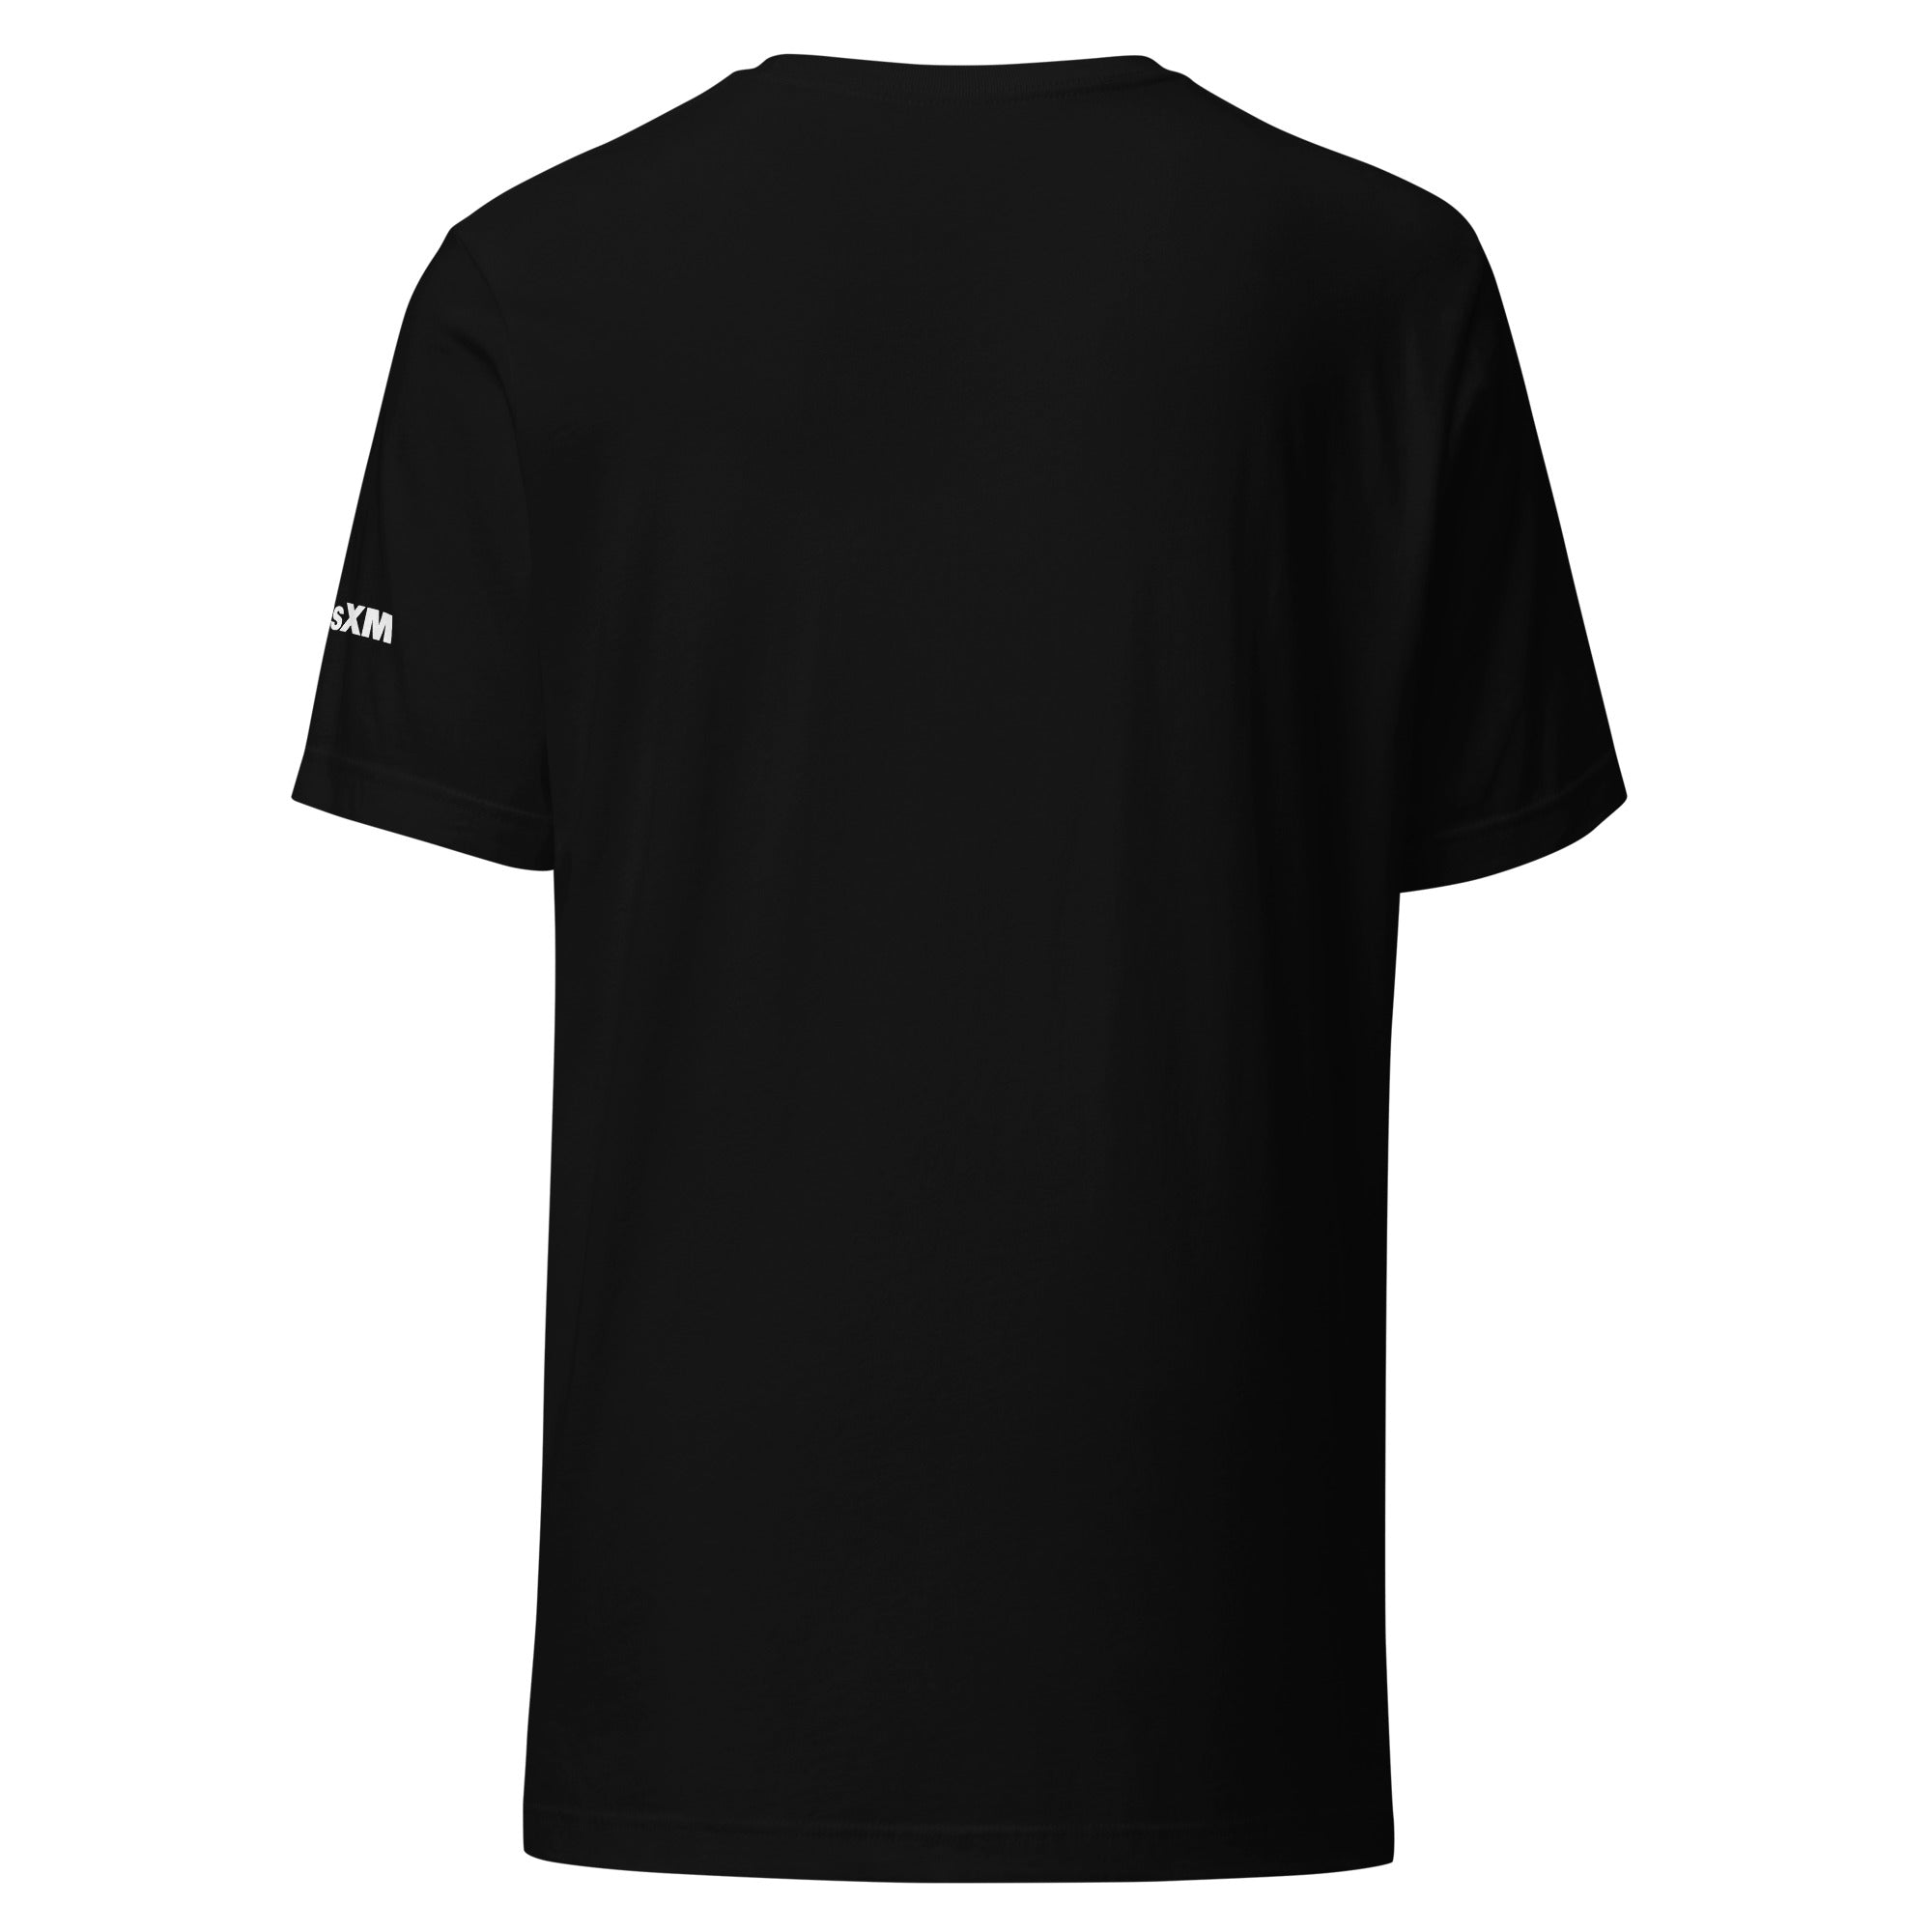 Jam on 309: T-shirt (Black)